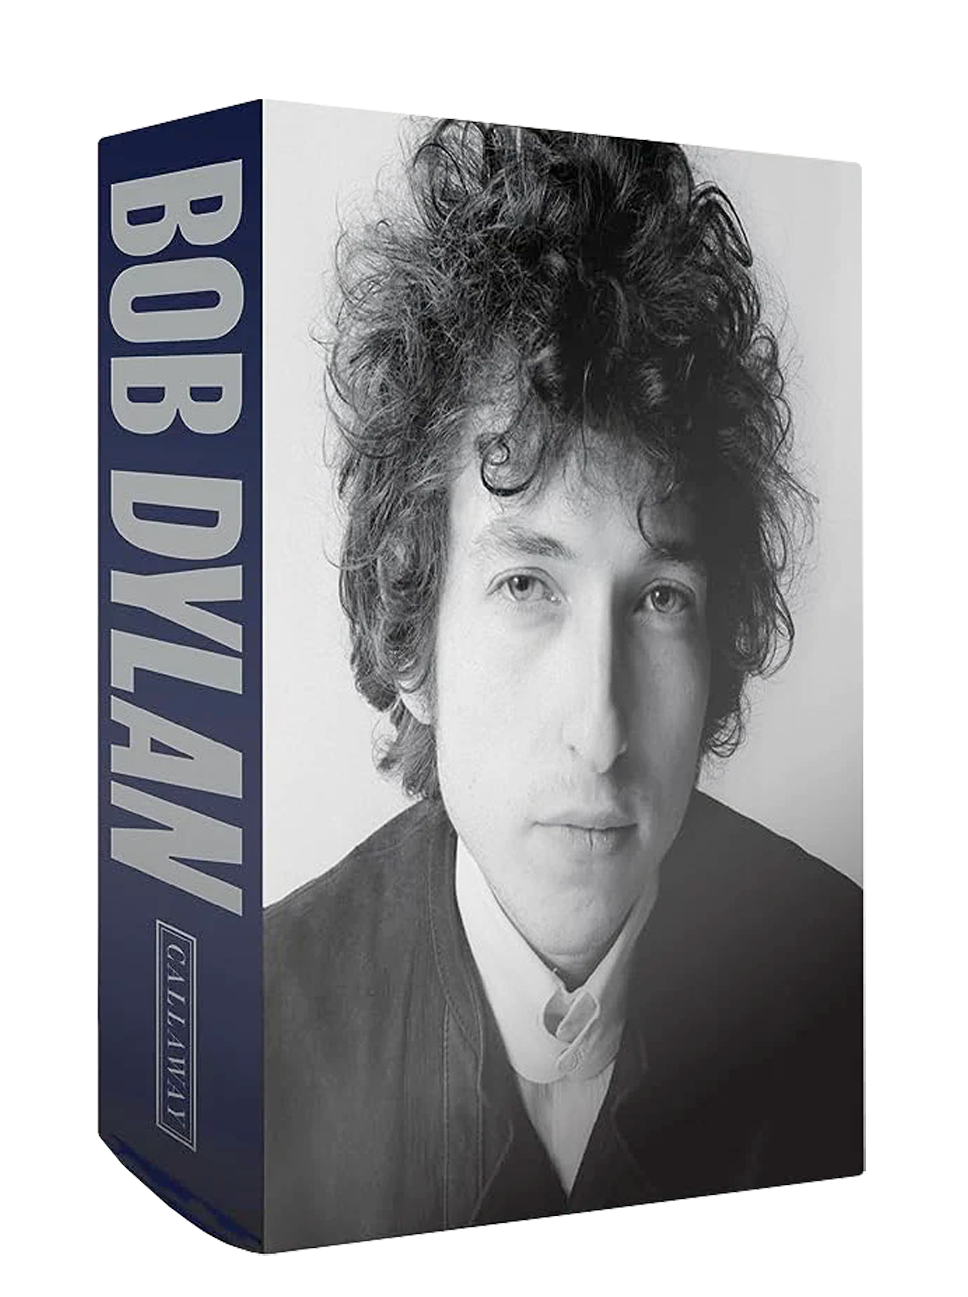 Bob Dylan: Mixing Up The Medicine